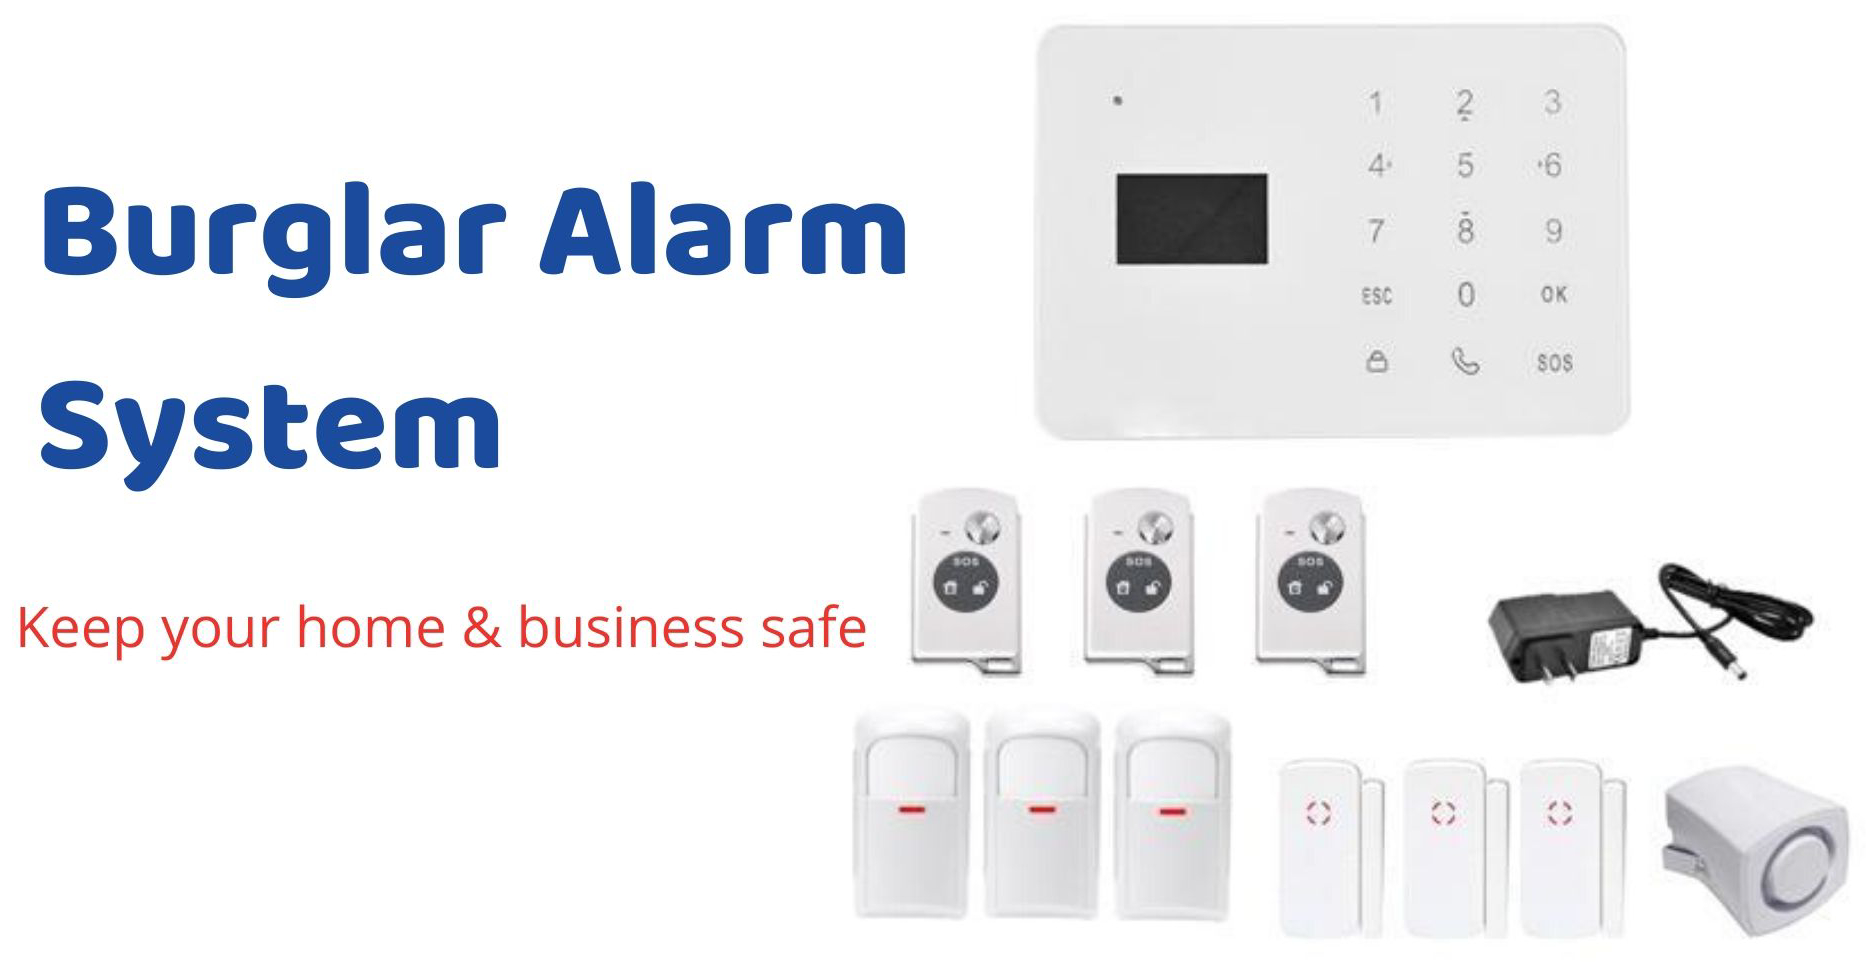 Burglar alarm system (1).jpg